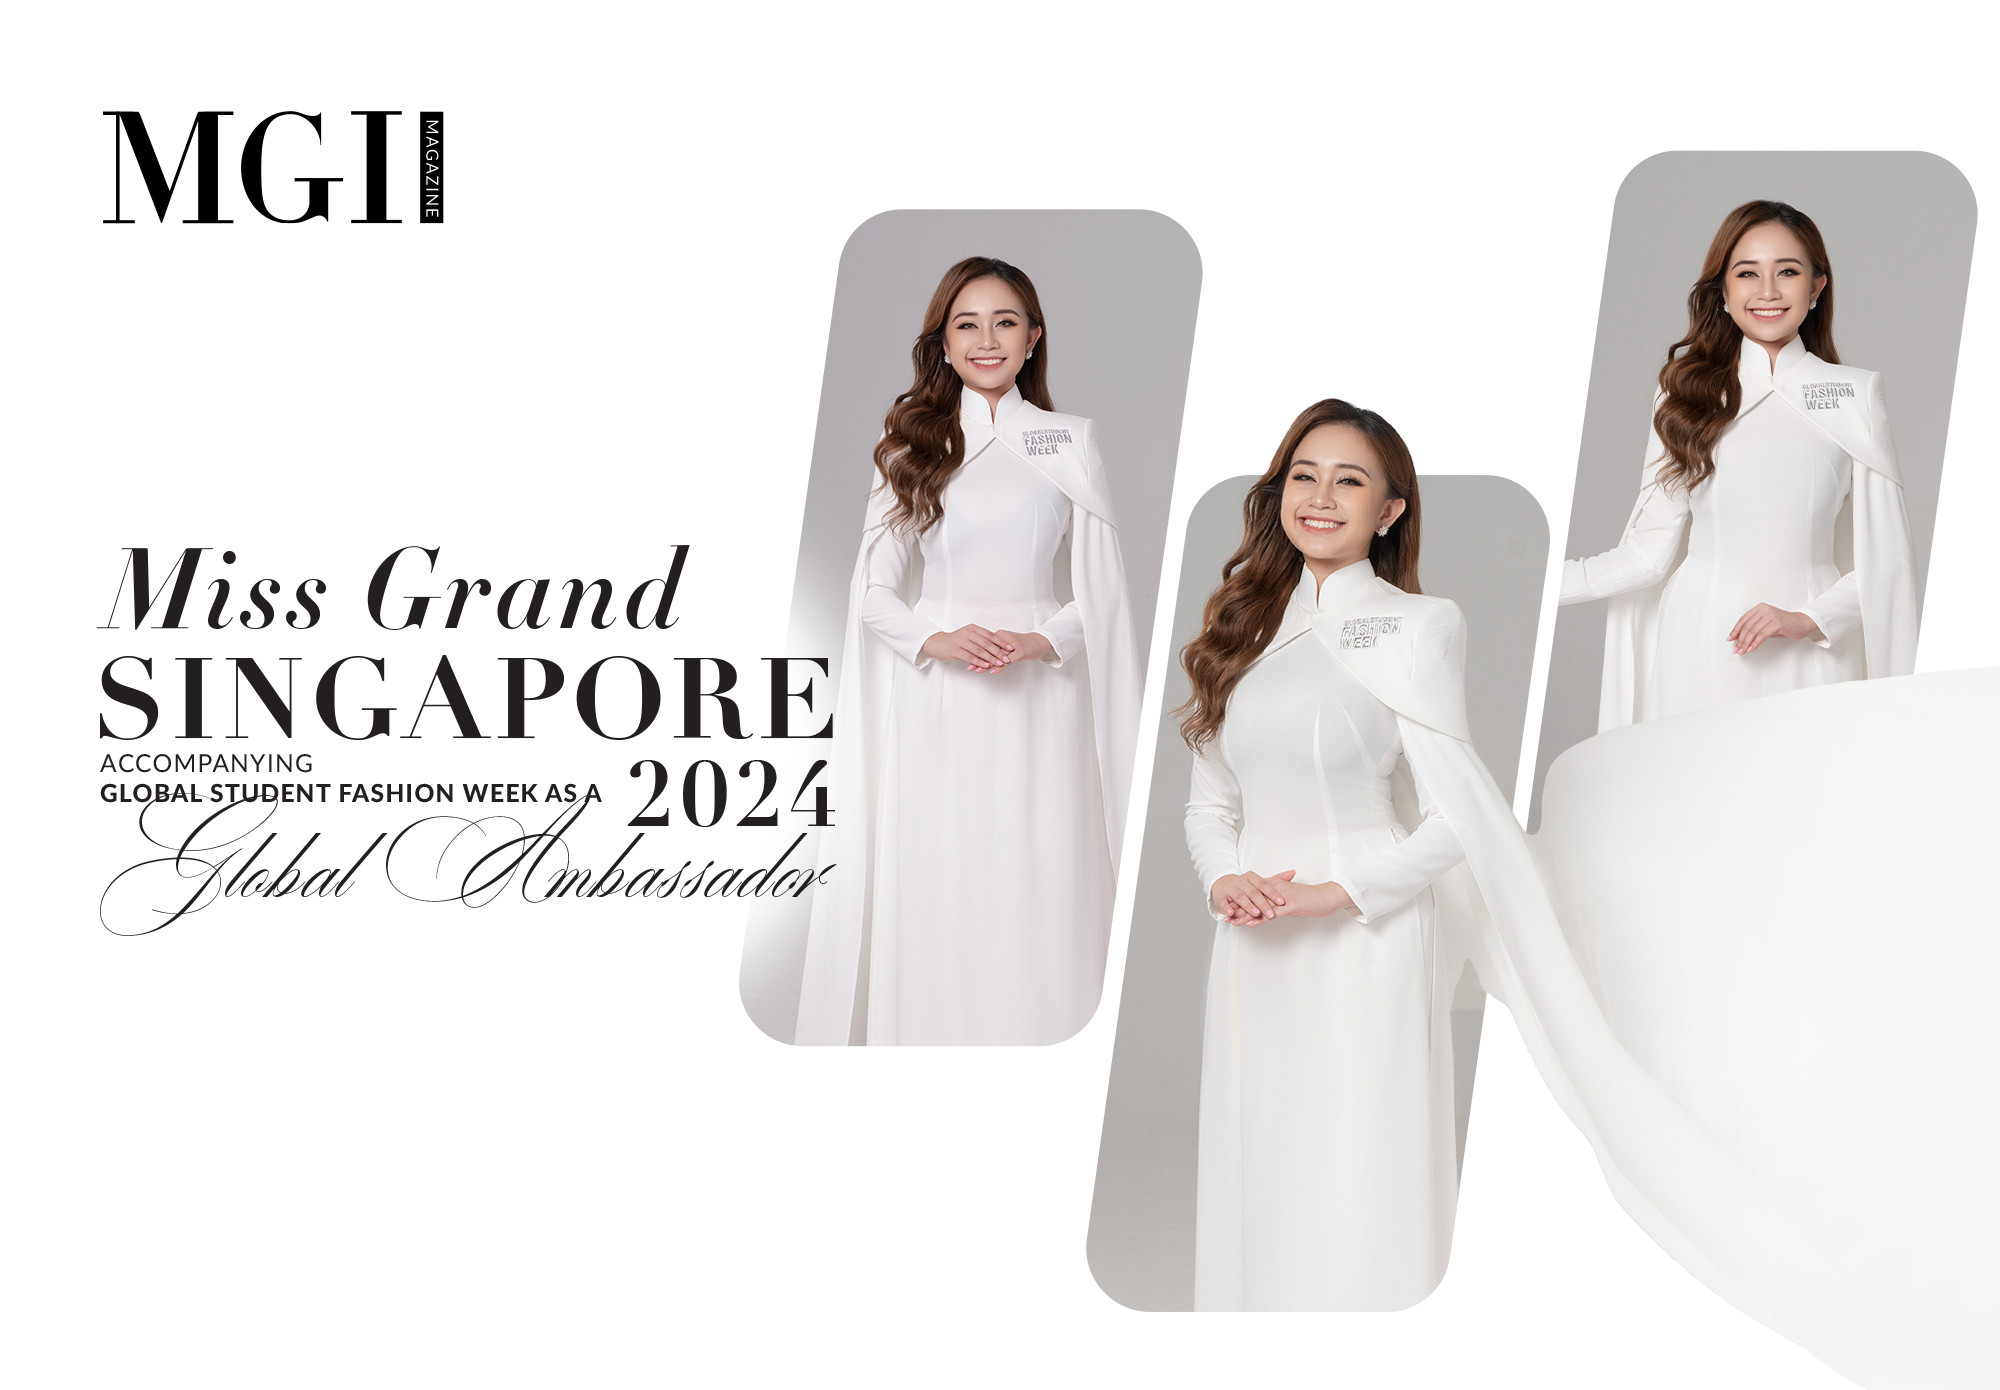 Miss Grand Singapore 2024 accompanying Global Student Fashion Week as a Global Ambassador